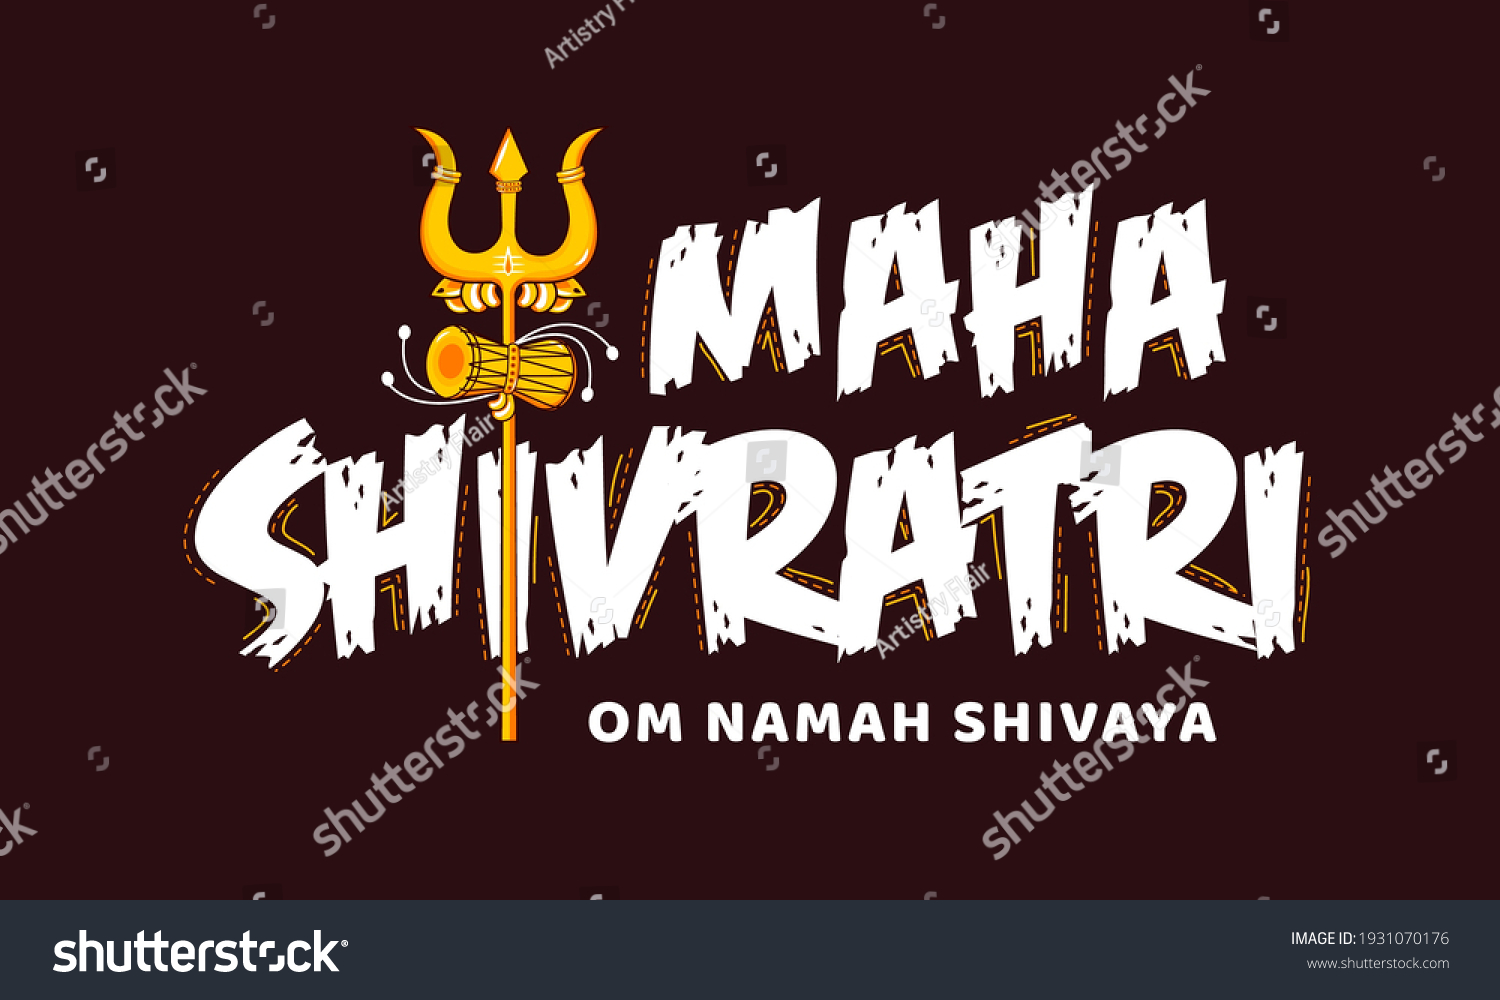 SVG of Creative typography on mahashivratri with hindi text om namah shivaya. svg